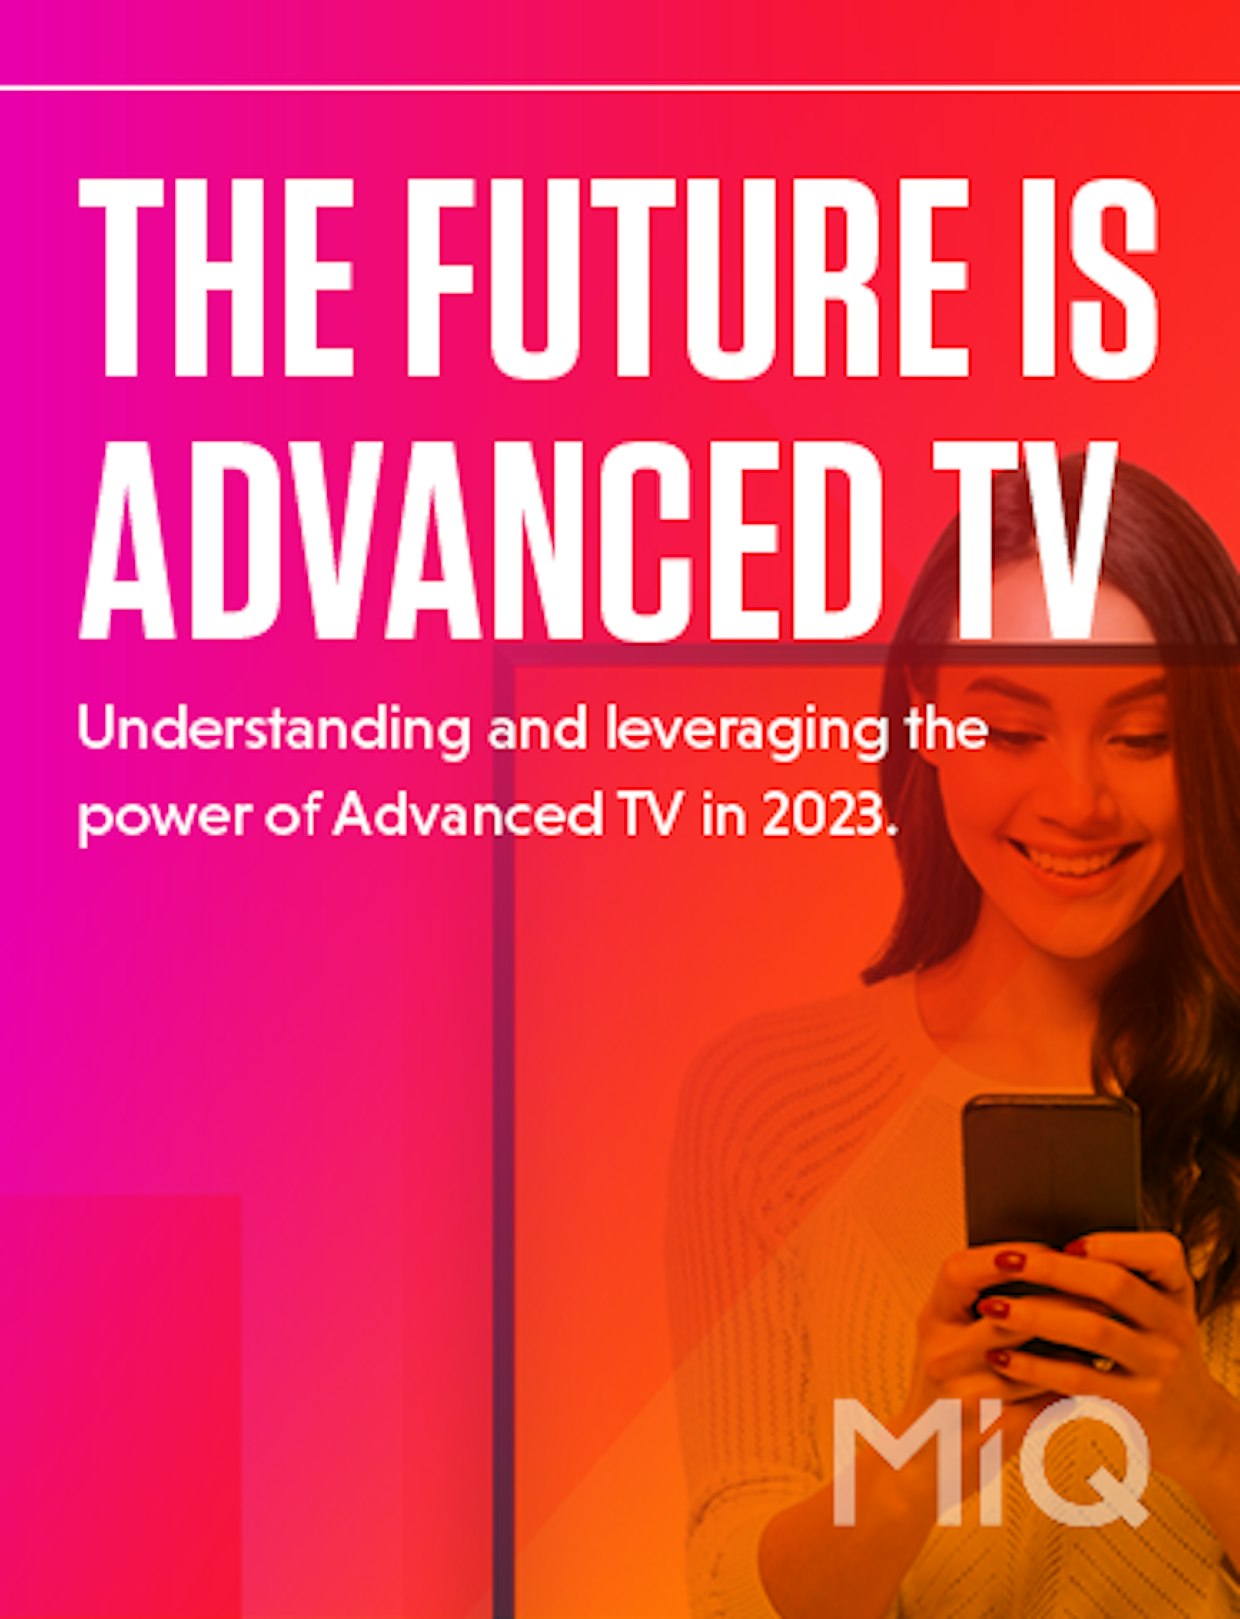 The future is Advanced TV